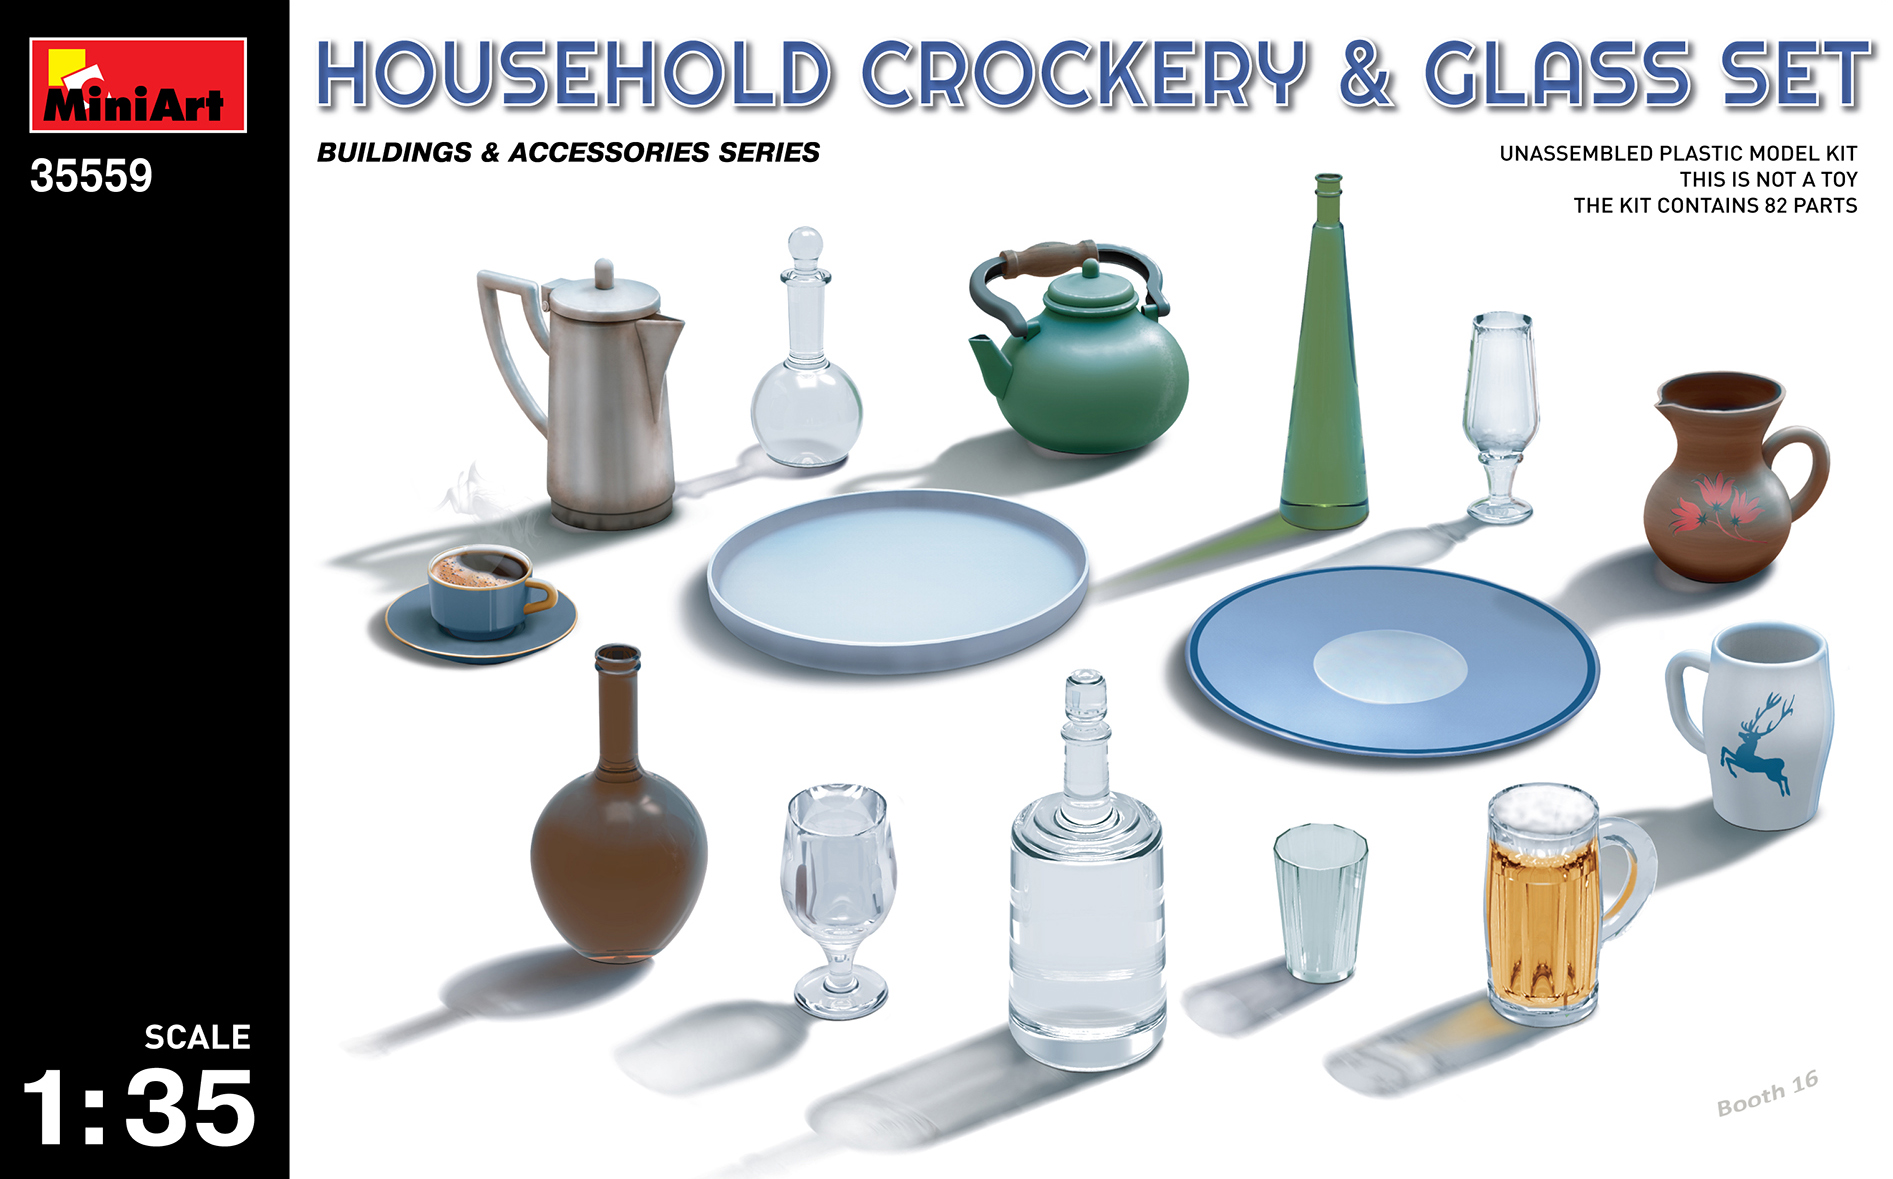 Household Crockery & Glass Set